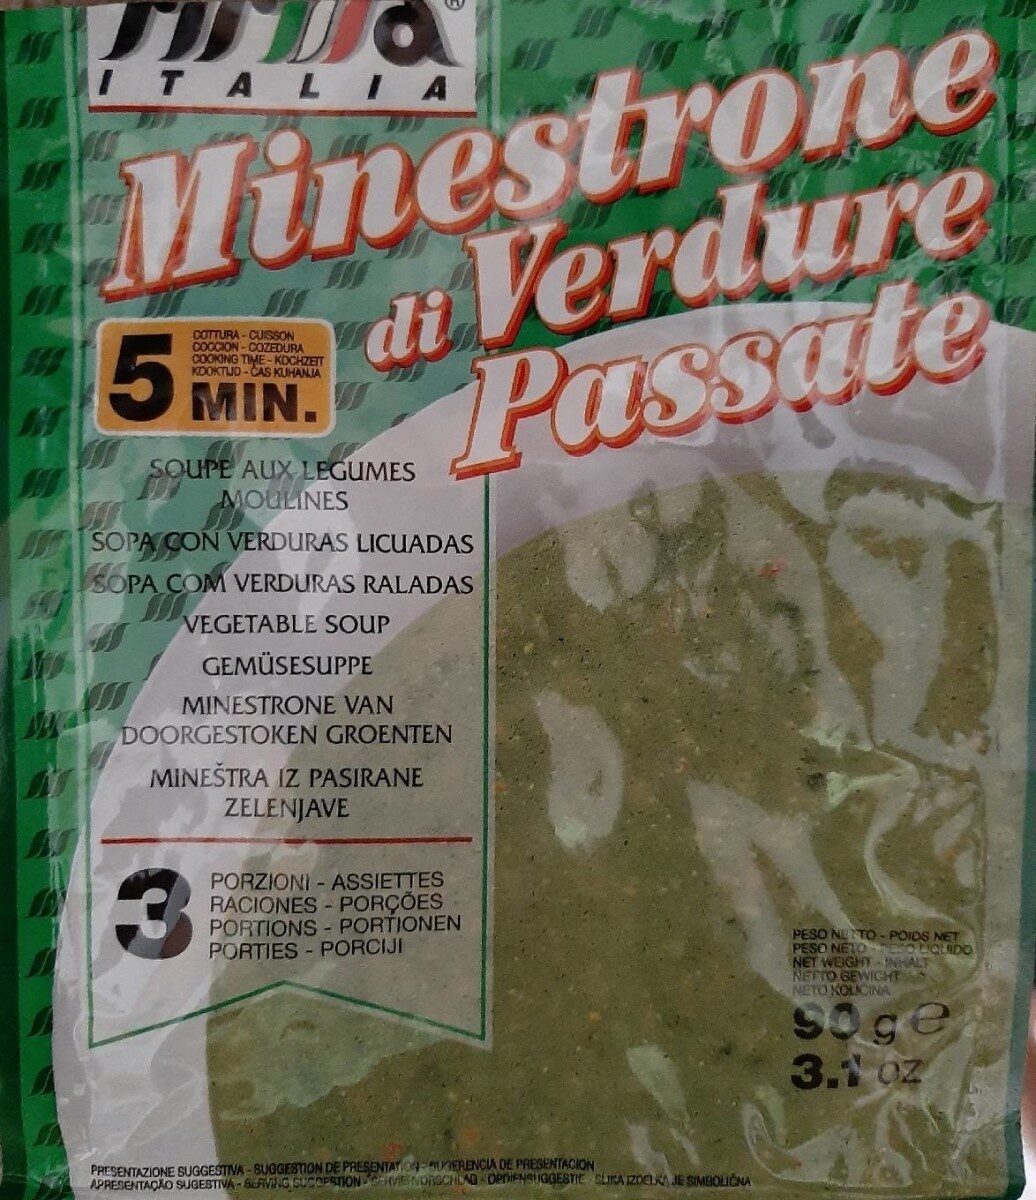 Minestrone di verdure passate - Product - it